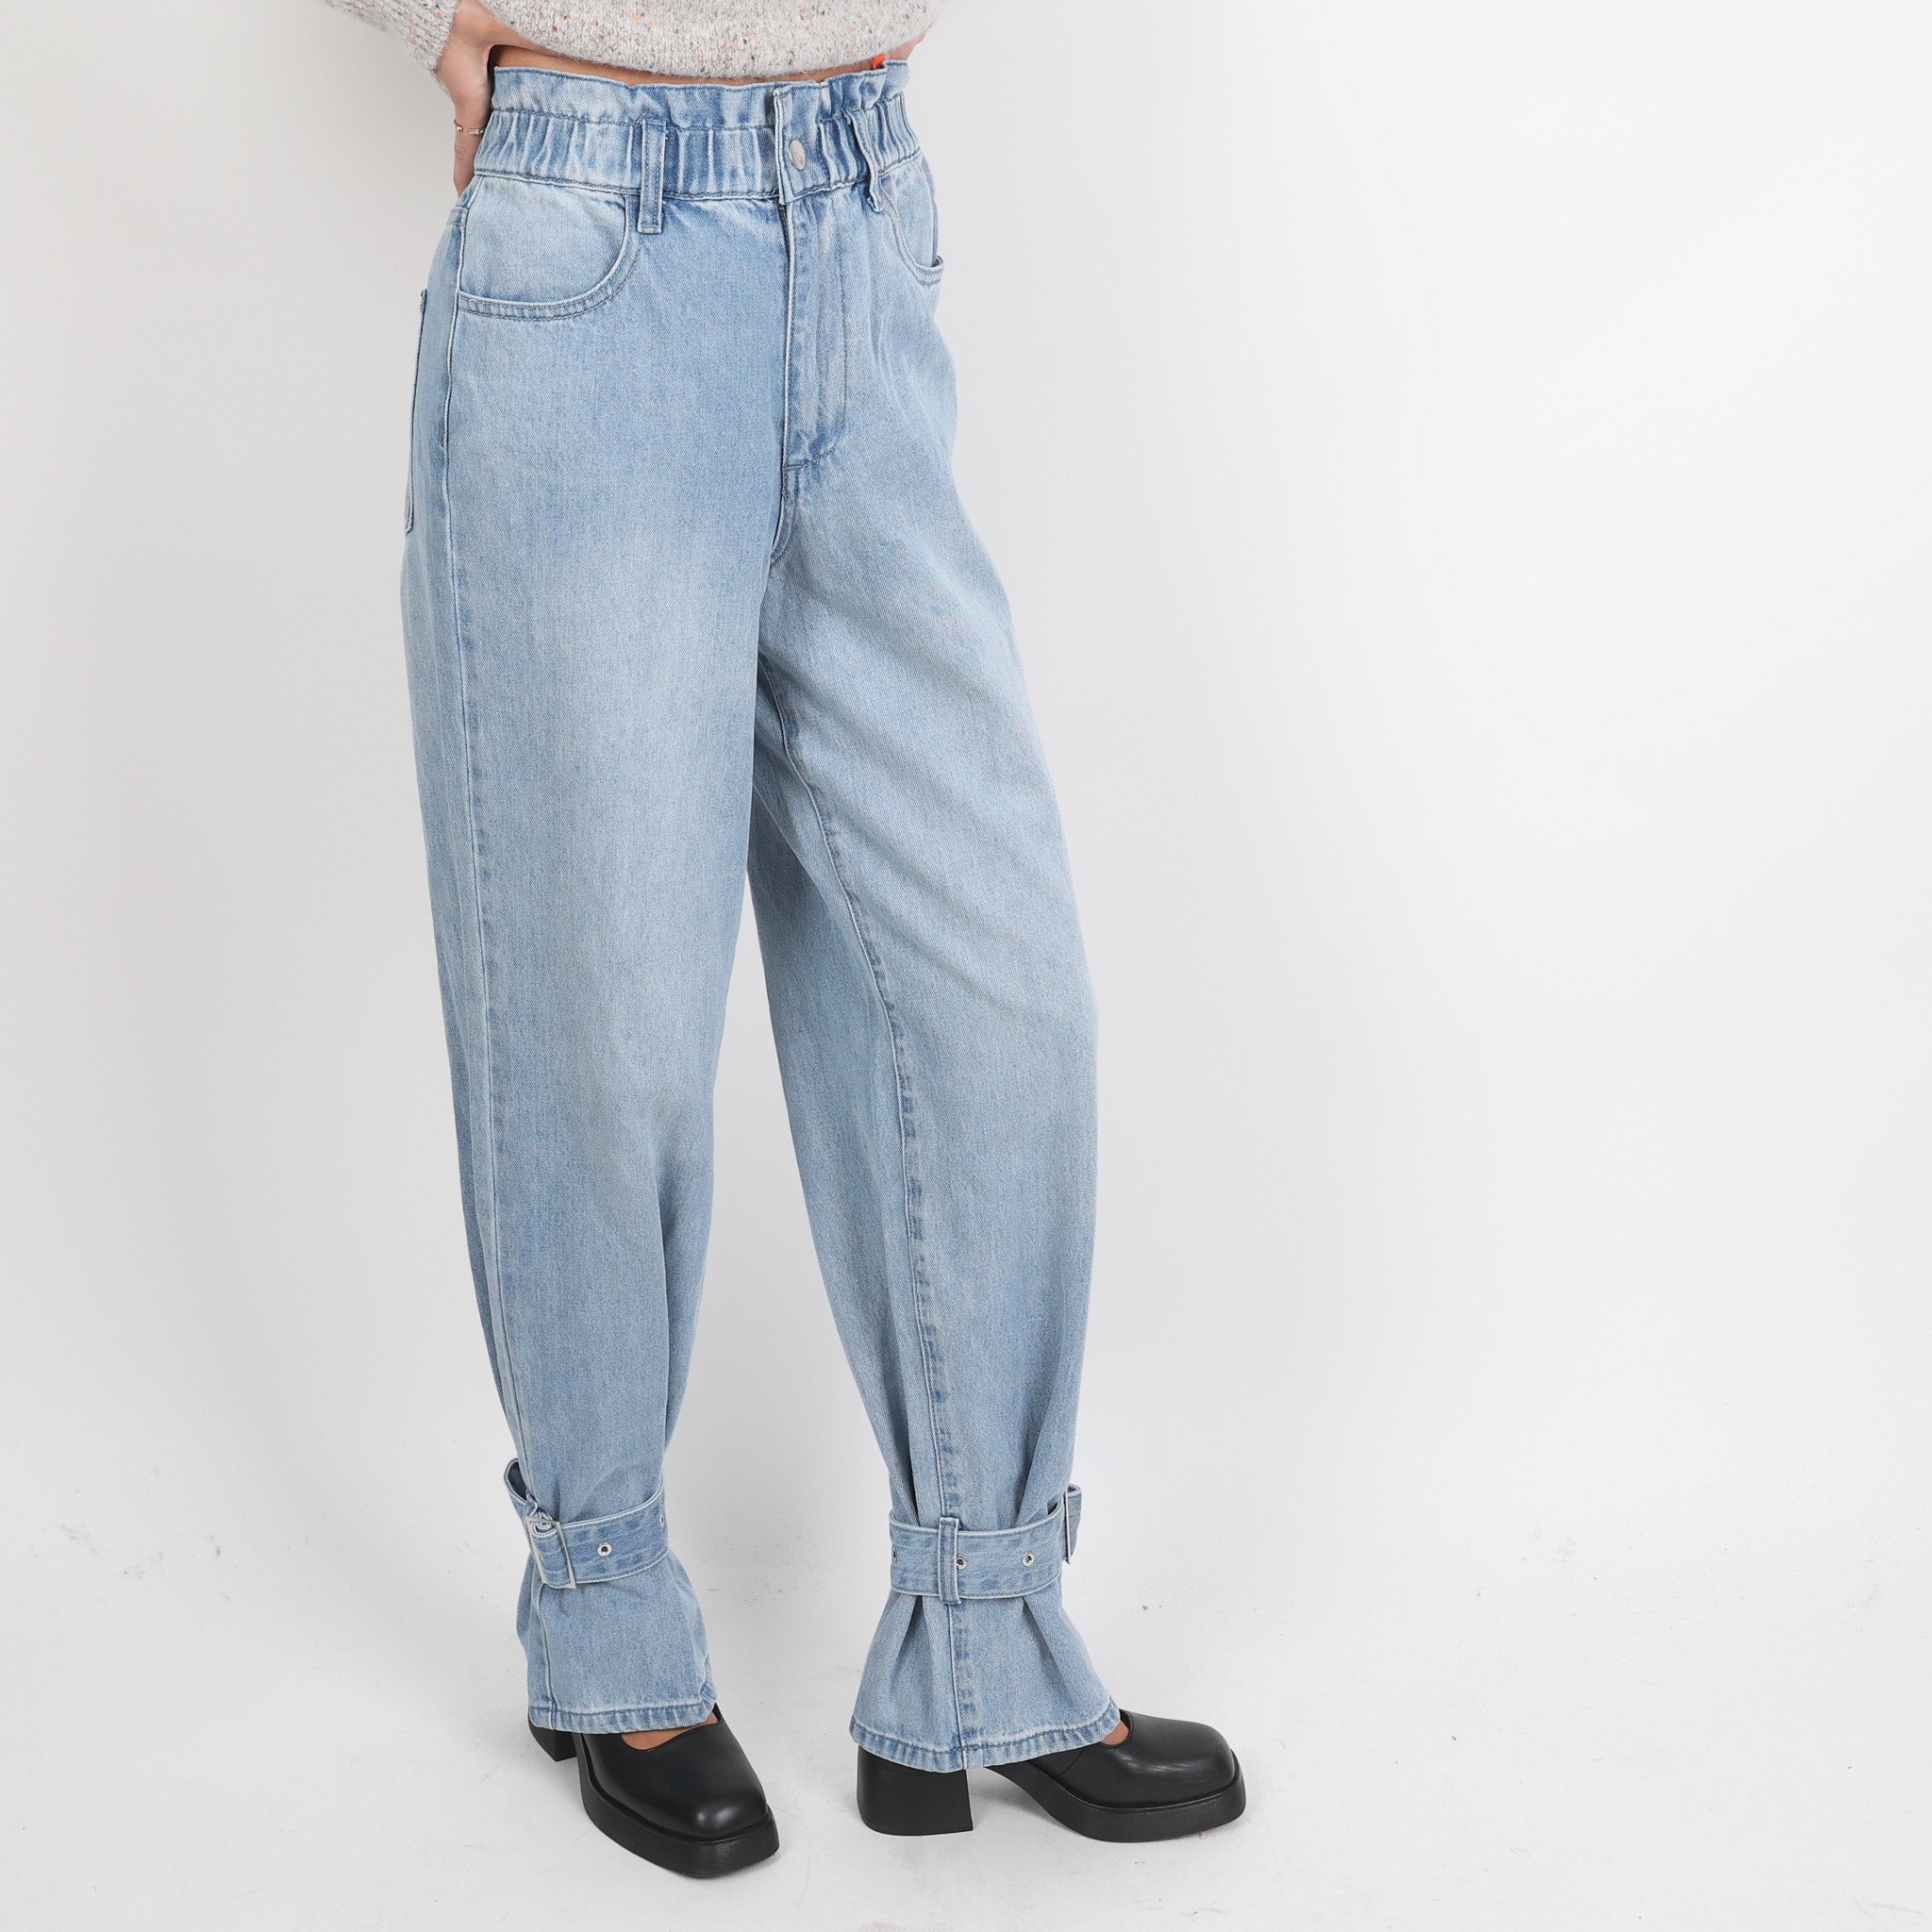 Jeans, Waist 25